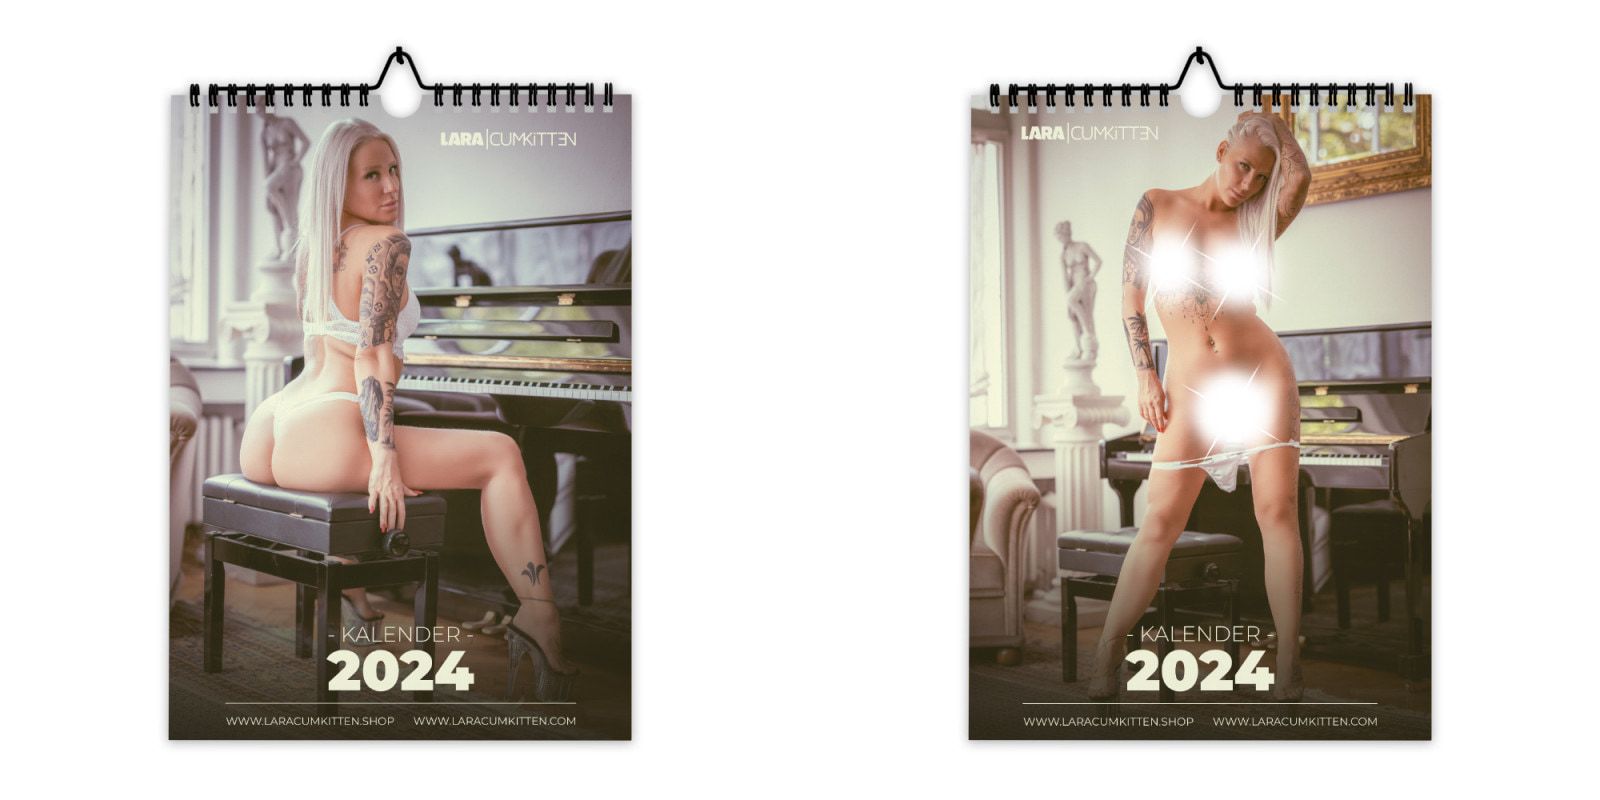 Lara CumKitten - Kalender 2024